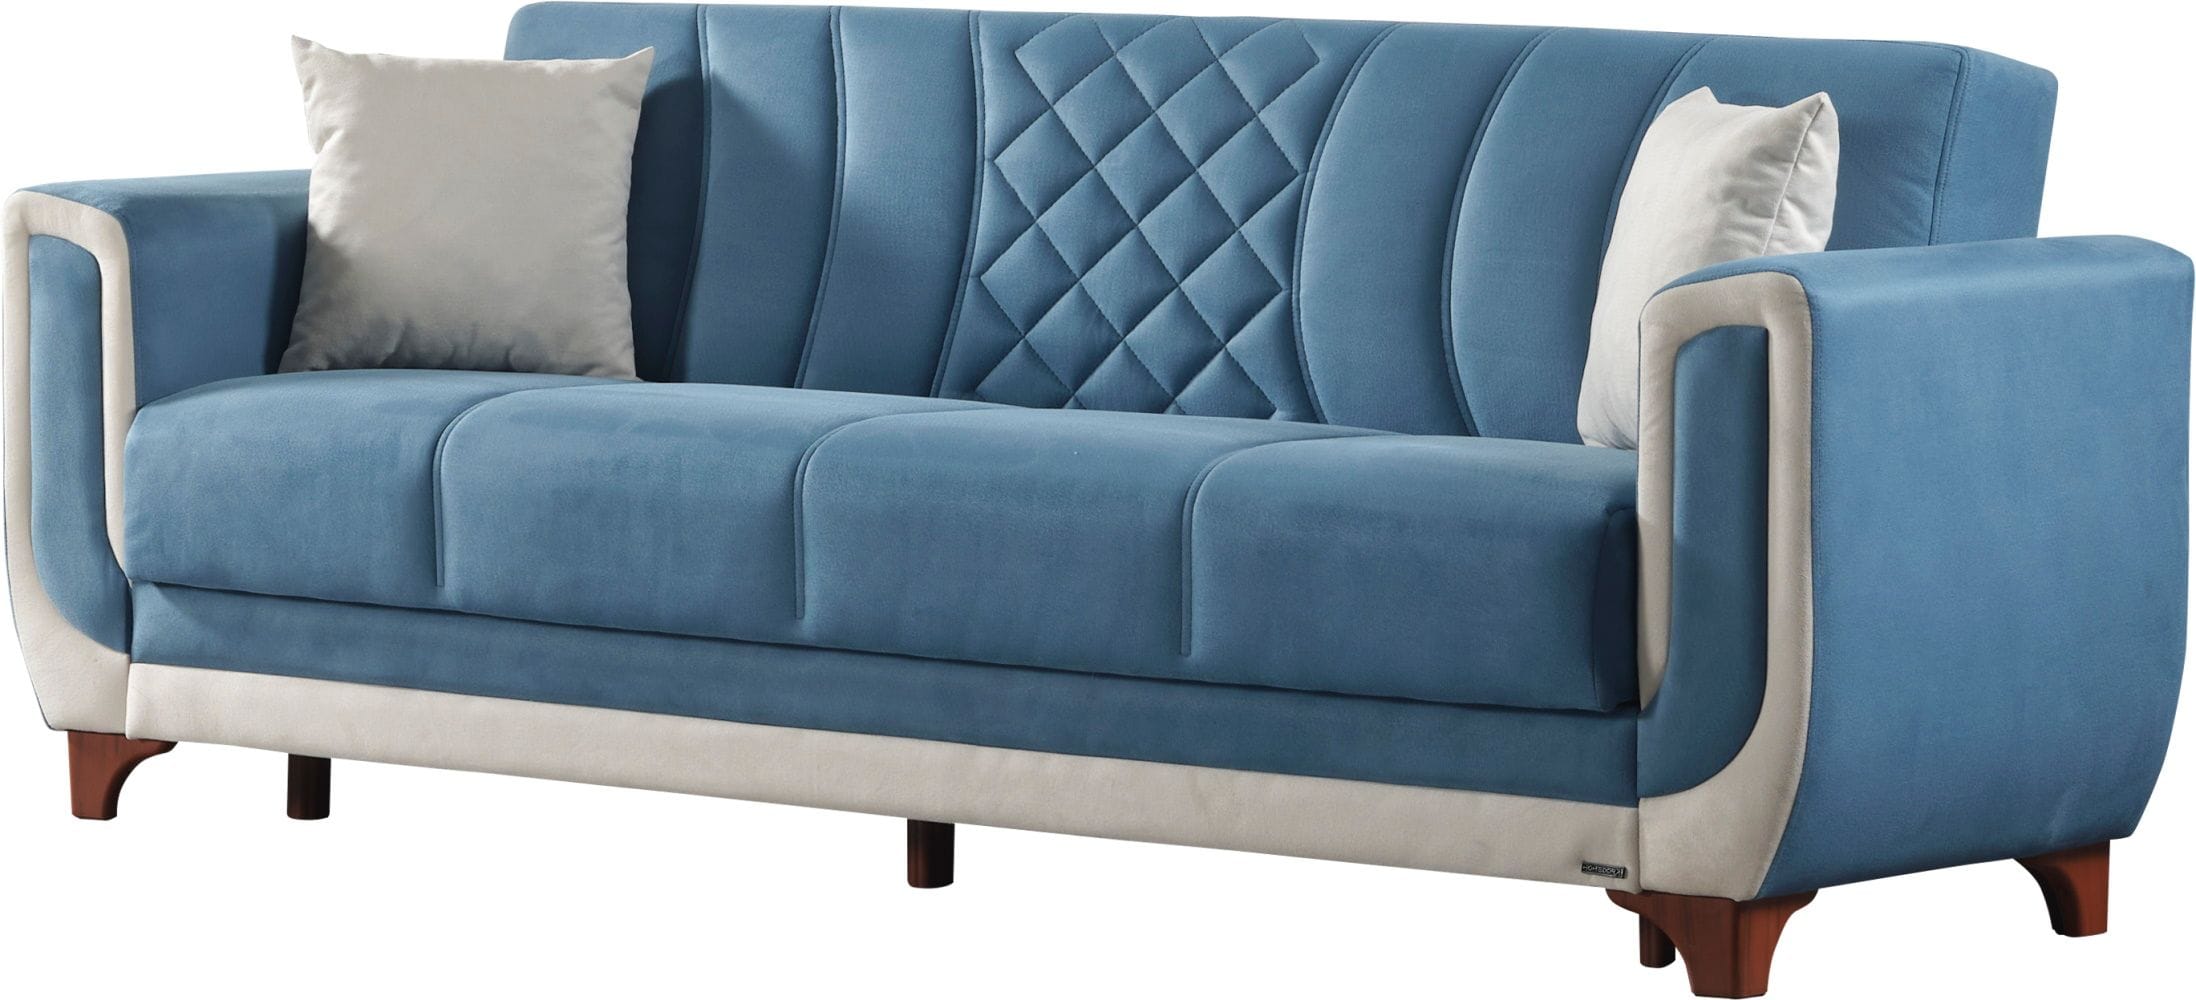 Berre 3 Seat Convertible Sofa Sleeper, Blue by Furnia Furniture